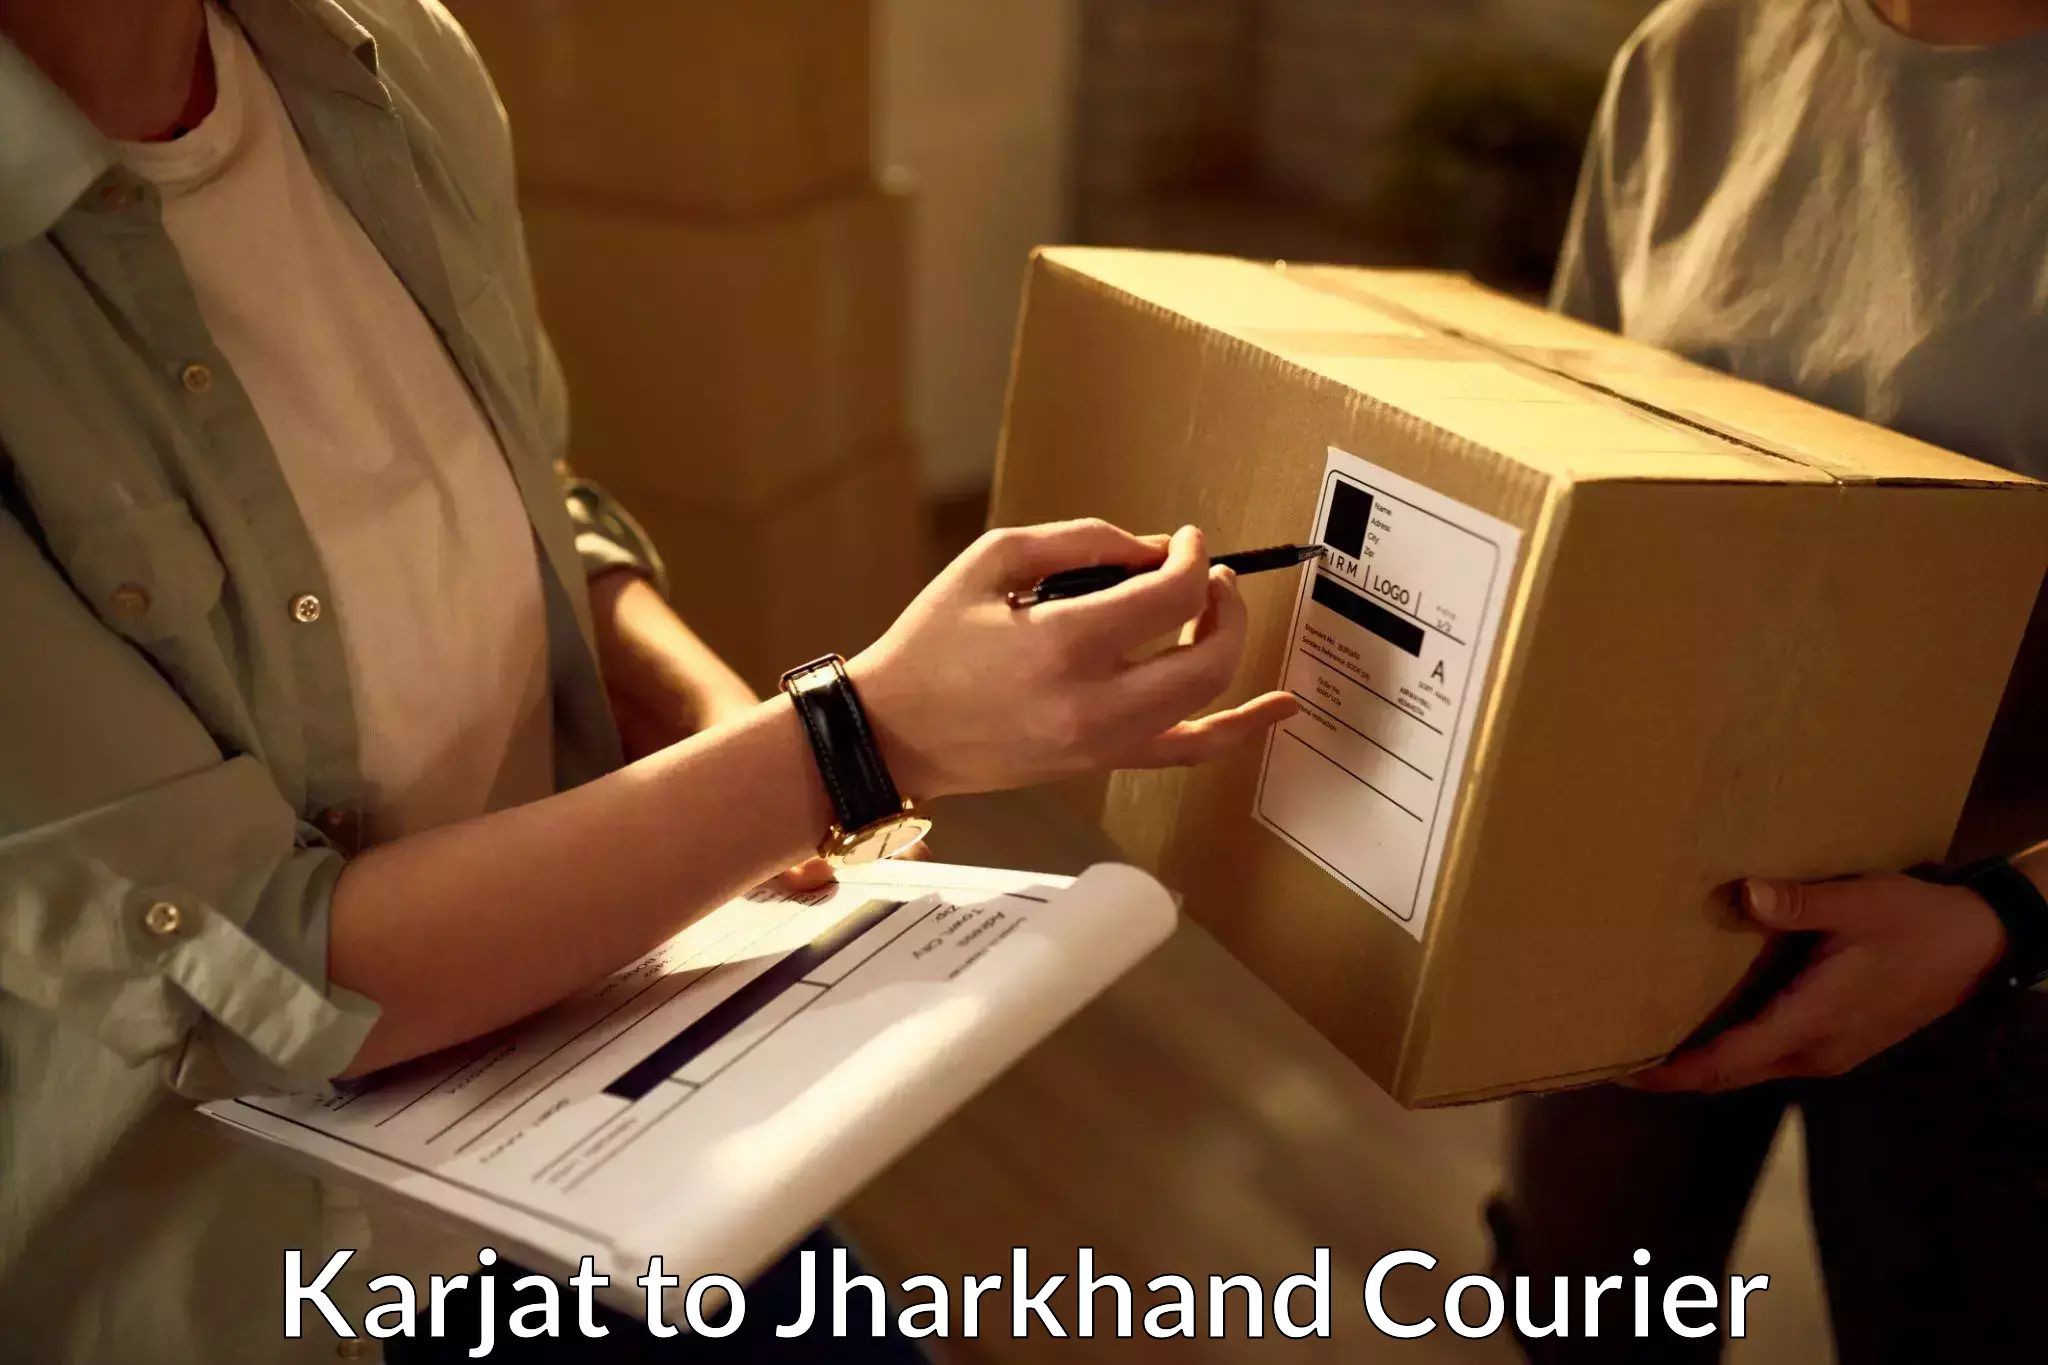 Urgent courier needs Karjat to Dhanbad